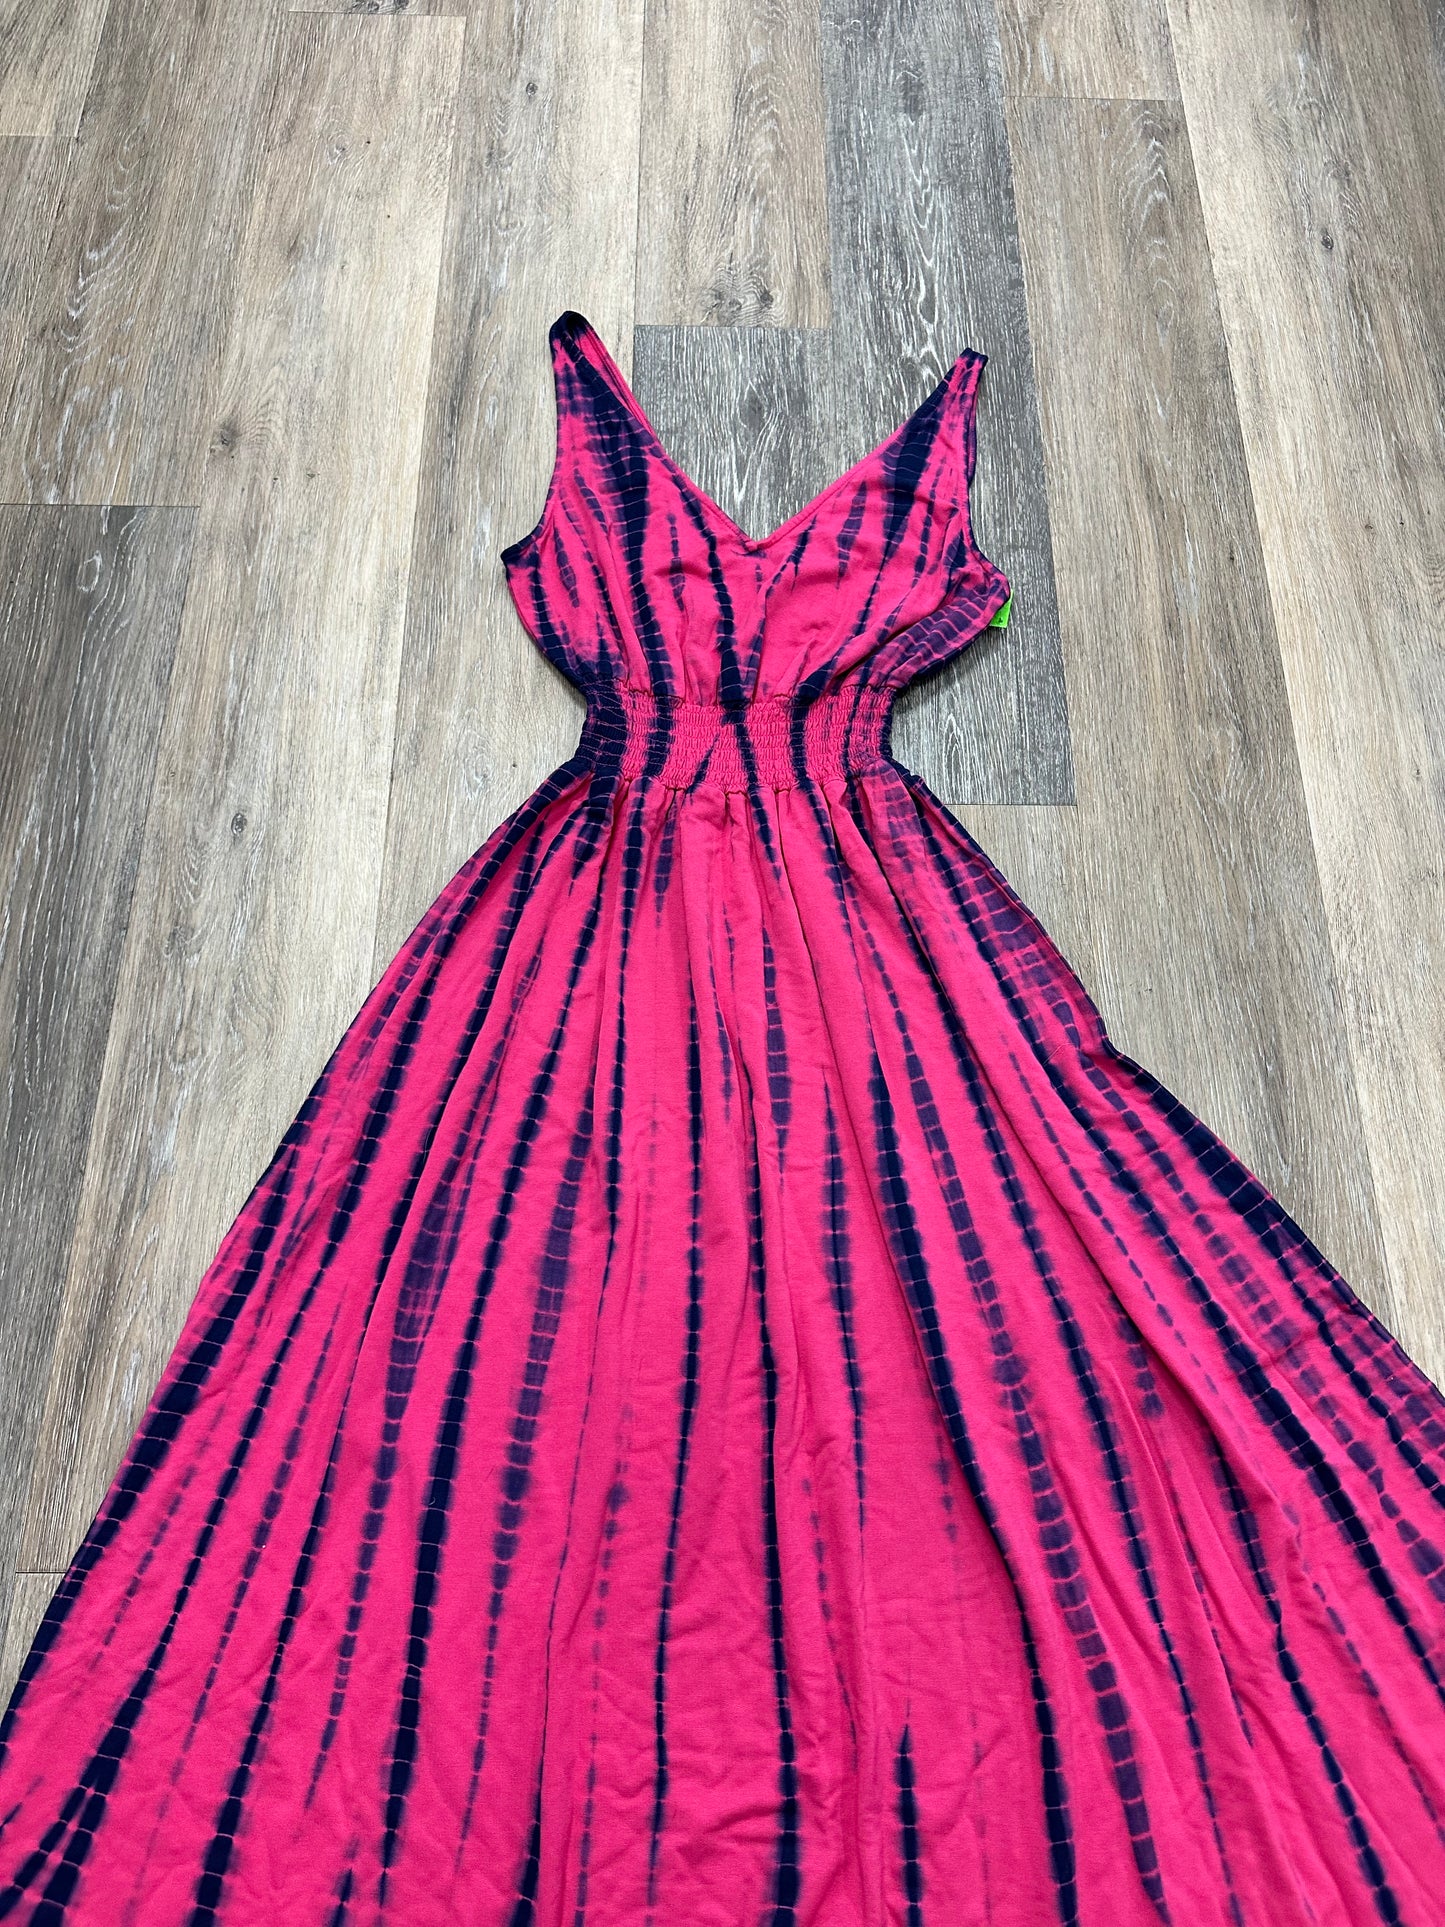 Dress Casual Maxi By Bb Dakota  Size: Xs